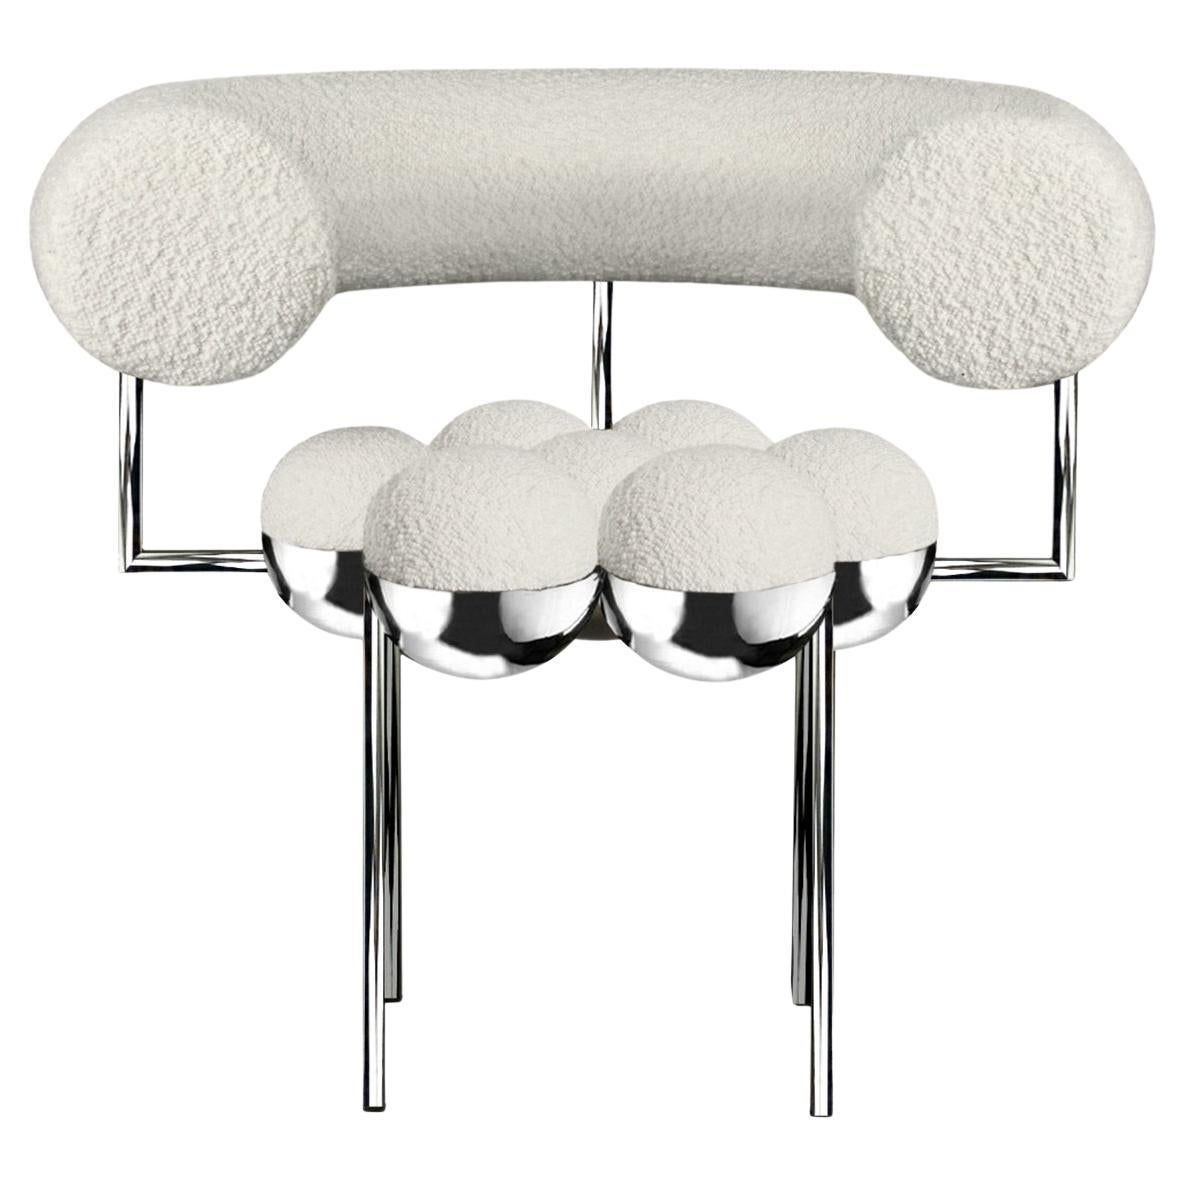 Saturn Chair, Chrome Finish Steel Frame and Cream Boucle Wool by Lara Bohinc